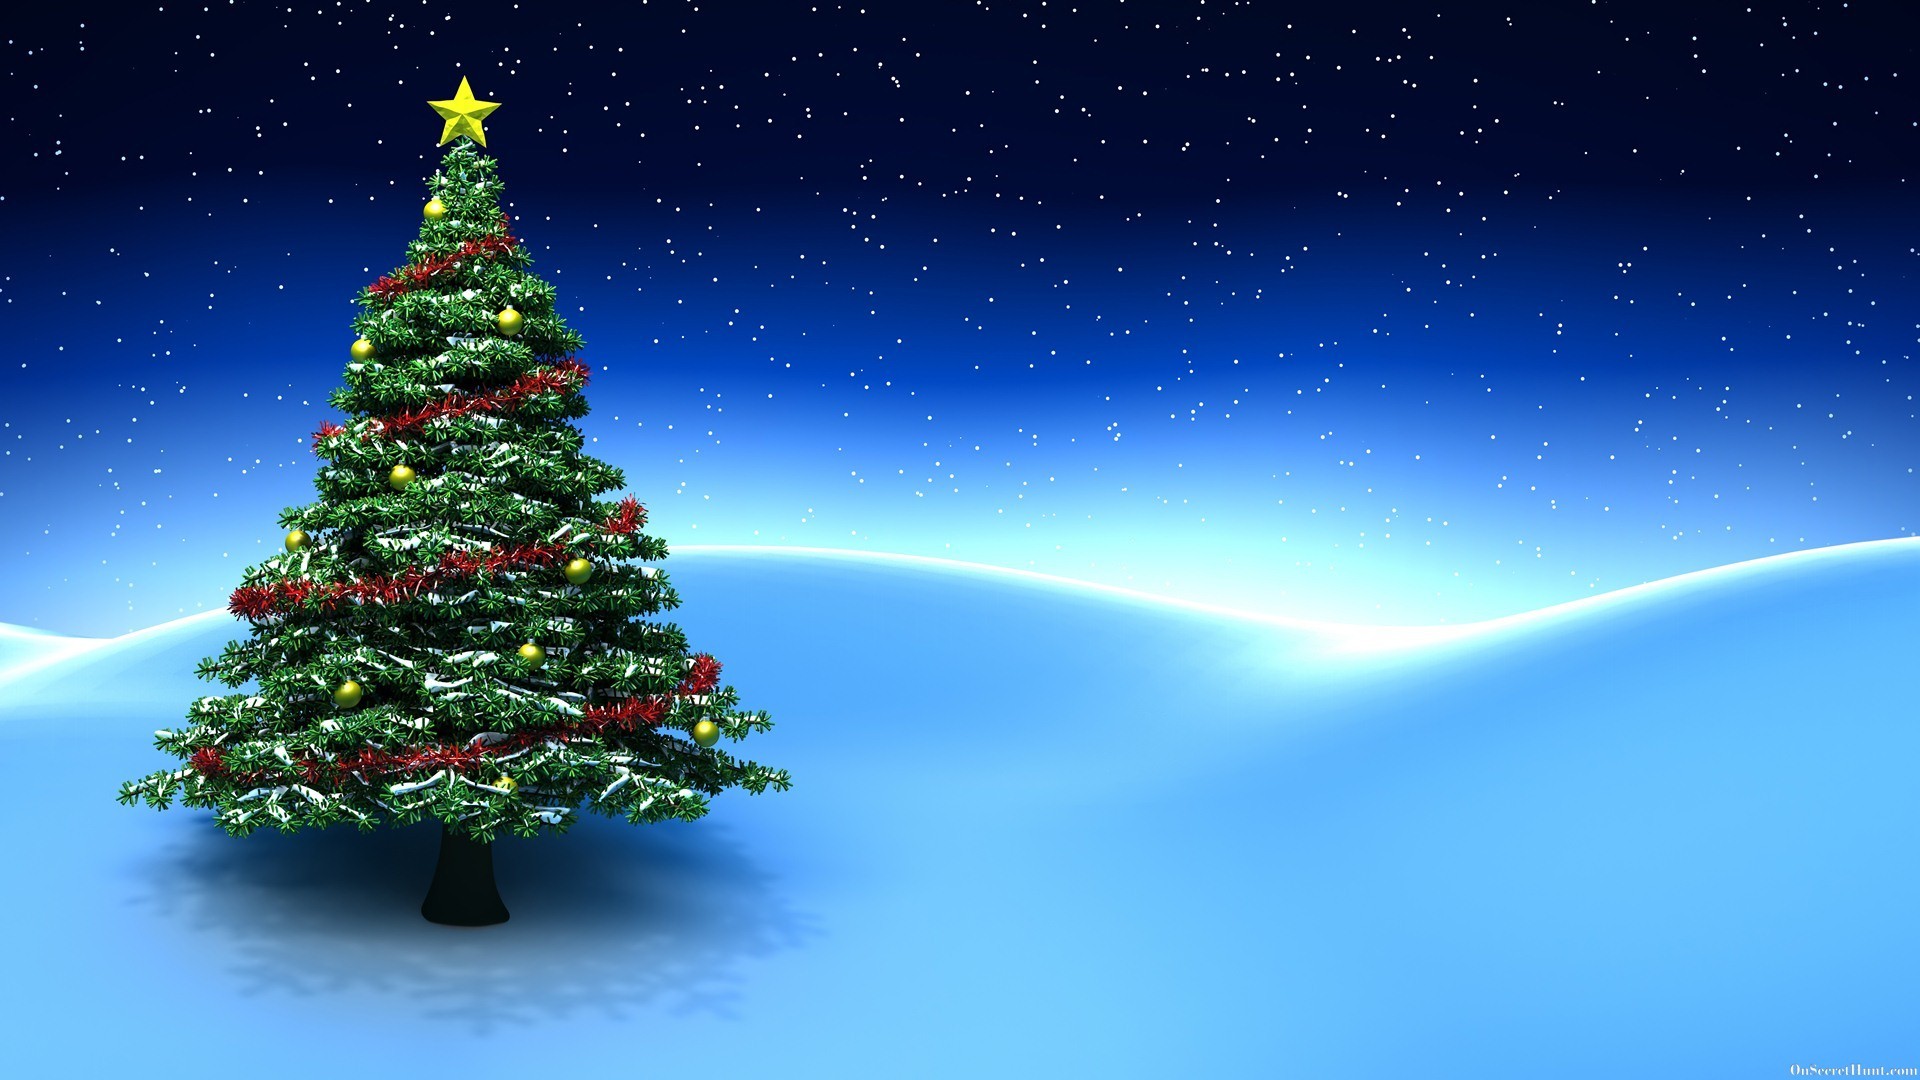 1920x1080 2015 Christmas tree background